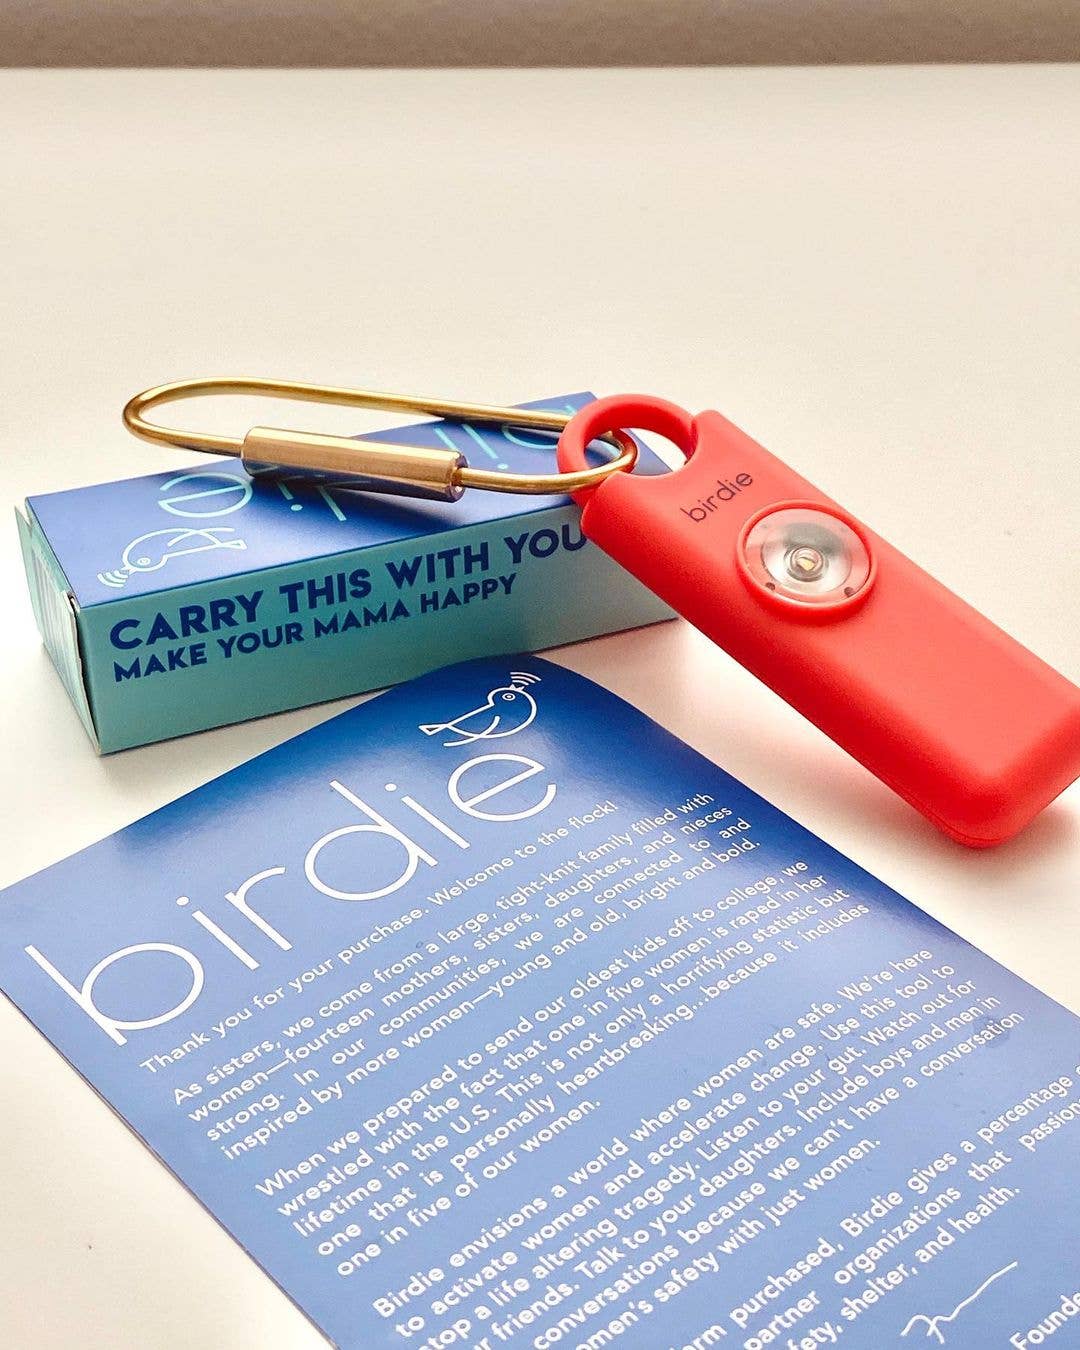 She's Birdie - She's Birdie Personal Safety Alarm: Single / Metallic Red